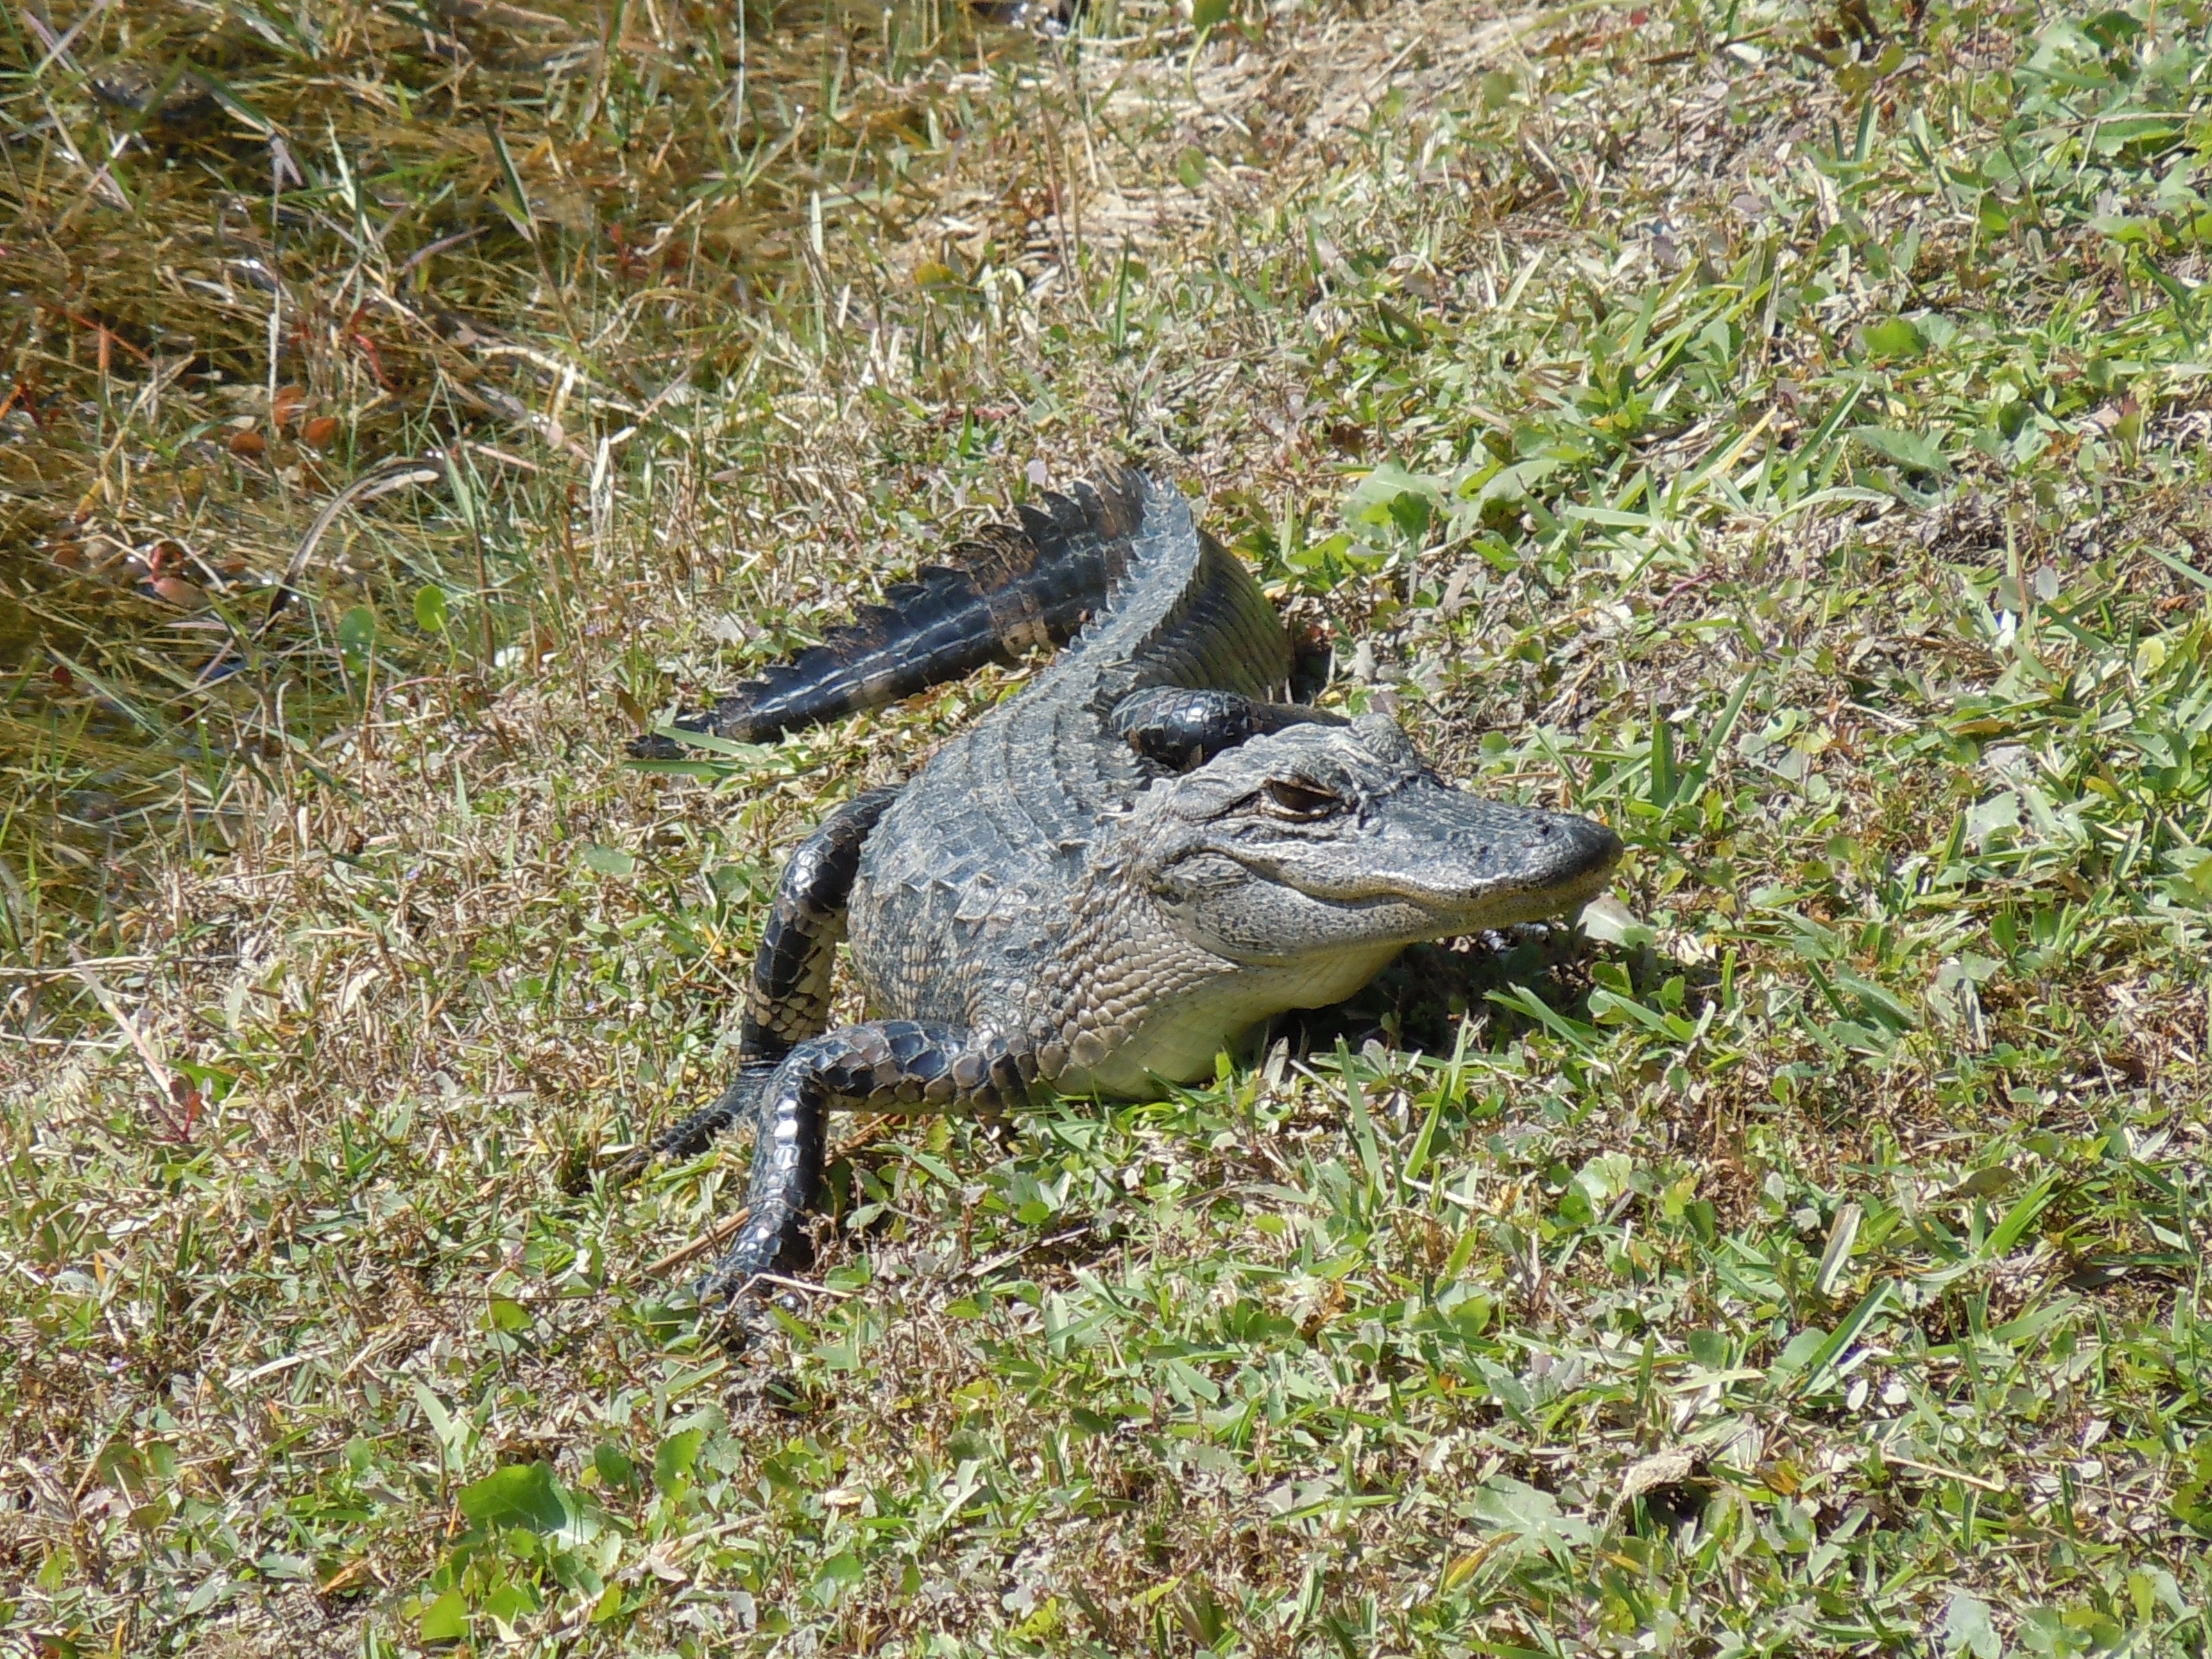 black crocodile on green grass during daytime